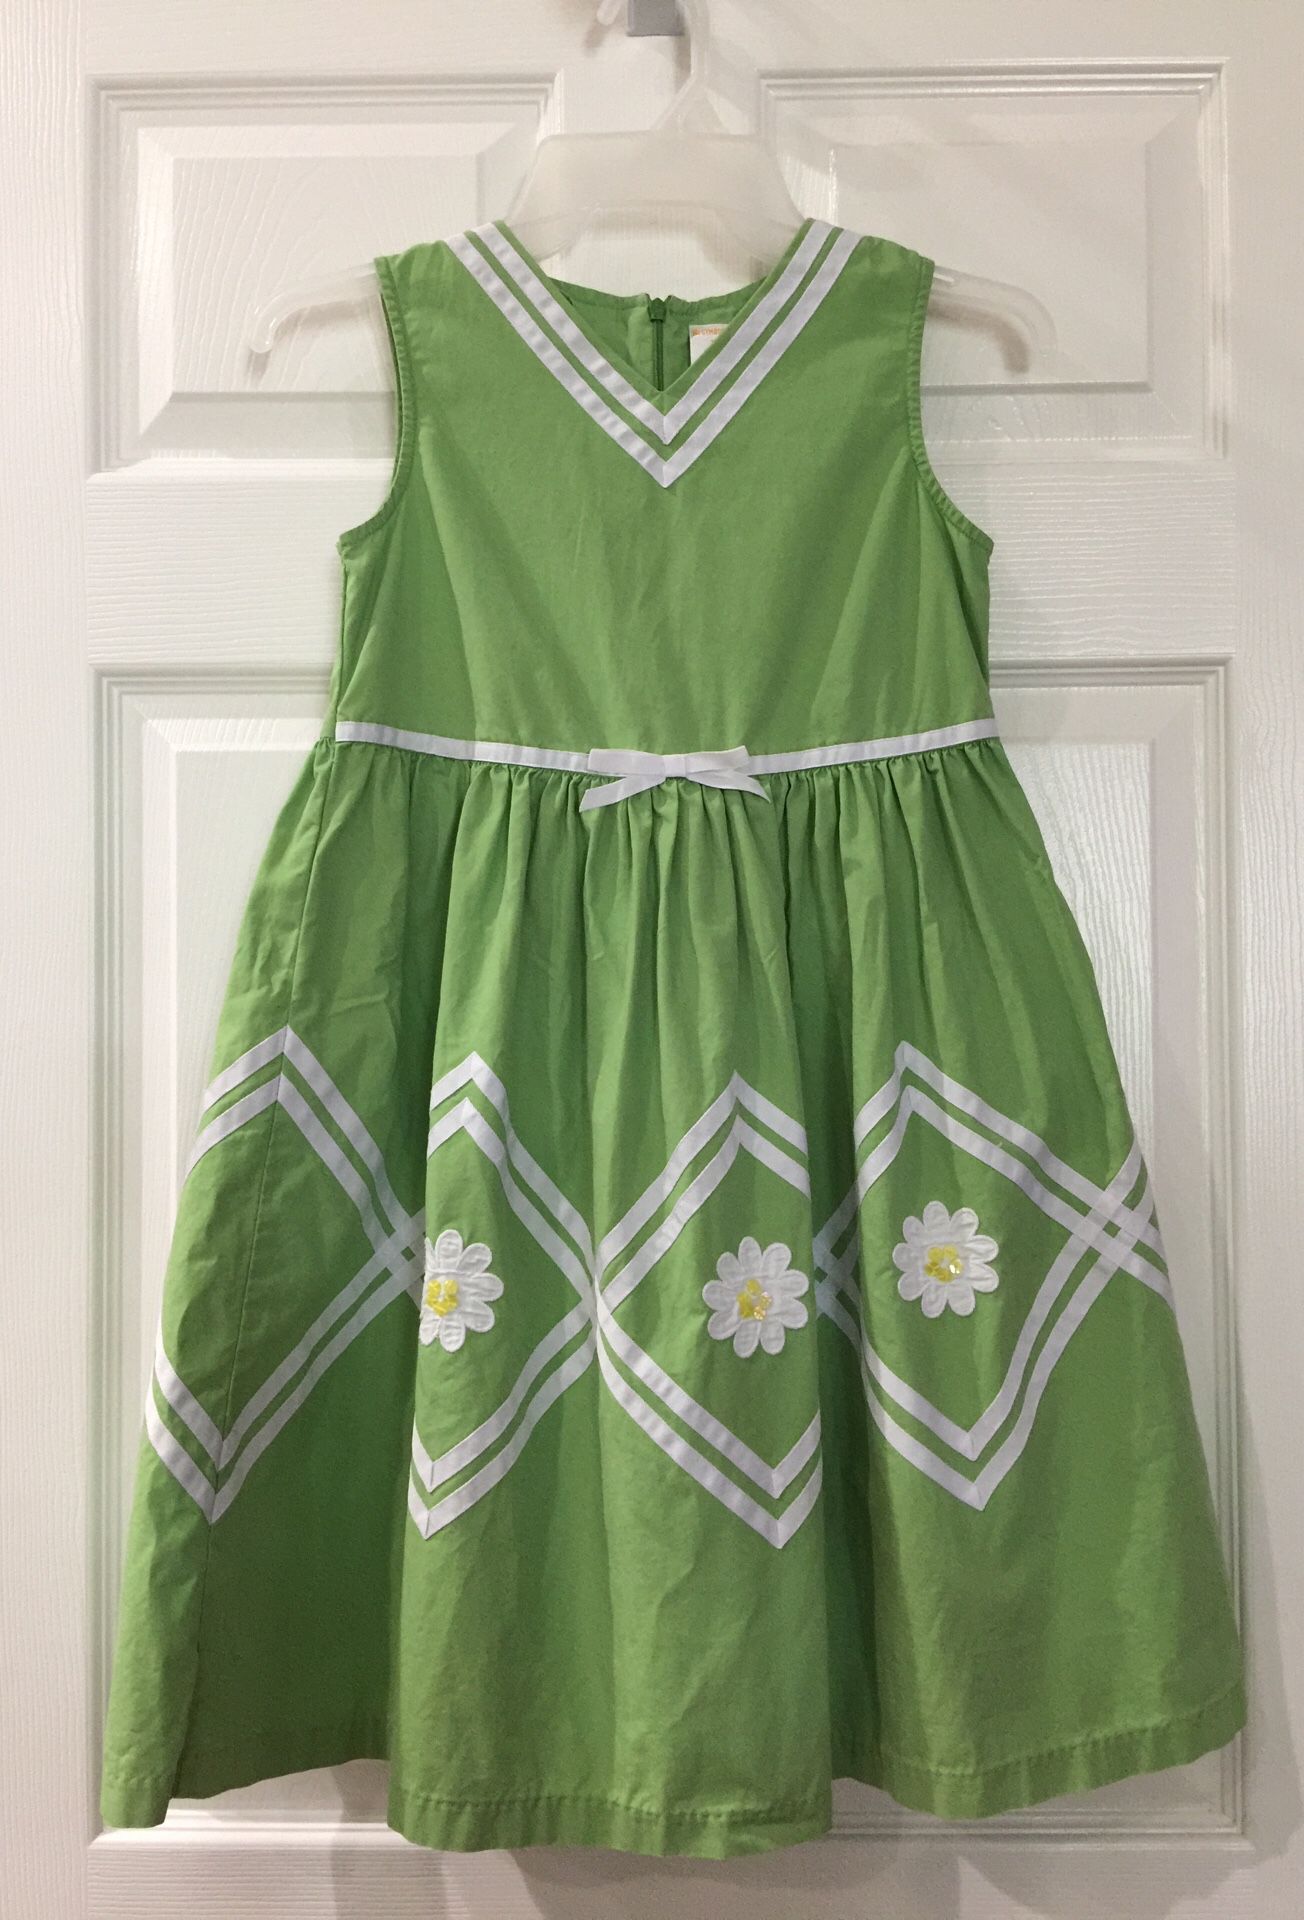 Gymboree Girls Size 10 green dress with ribbon & flowers